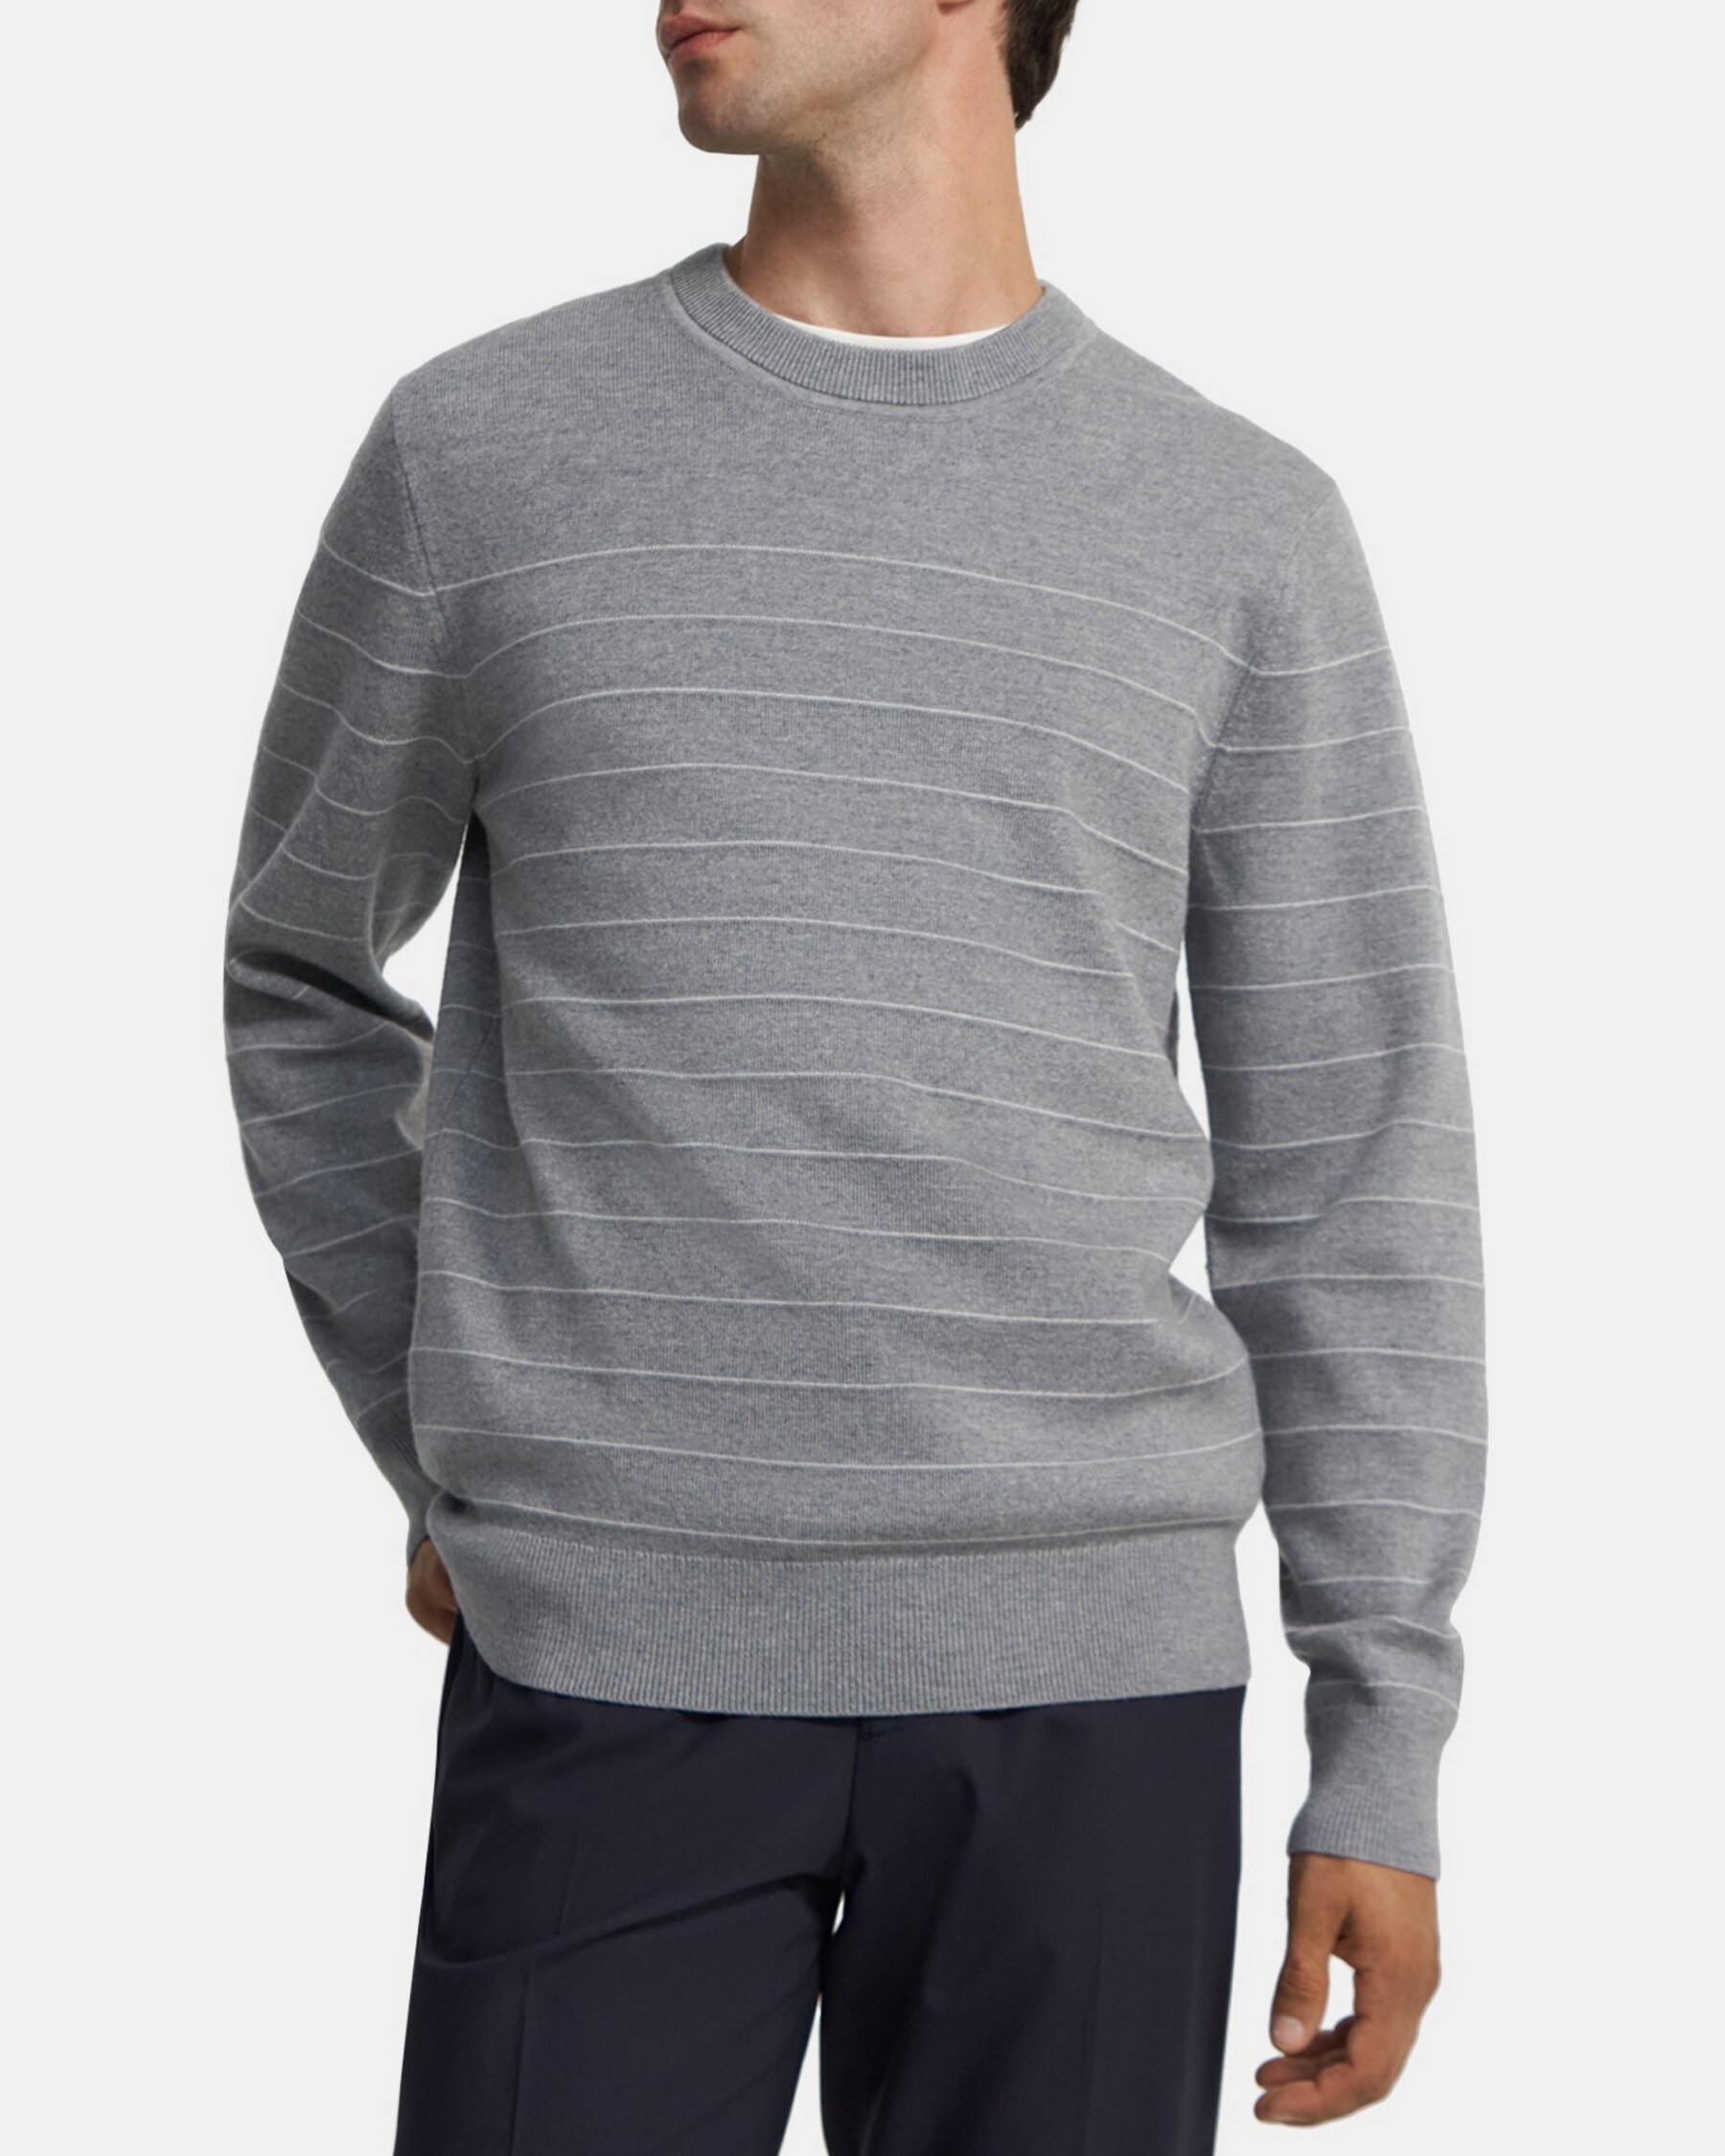 Nathan Striped Sweater in Merino Wool